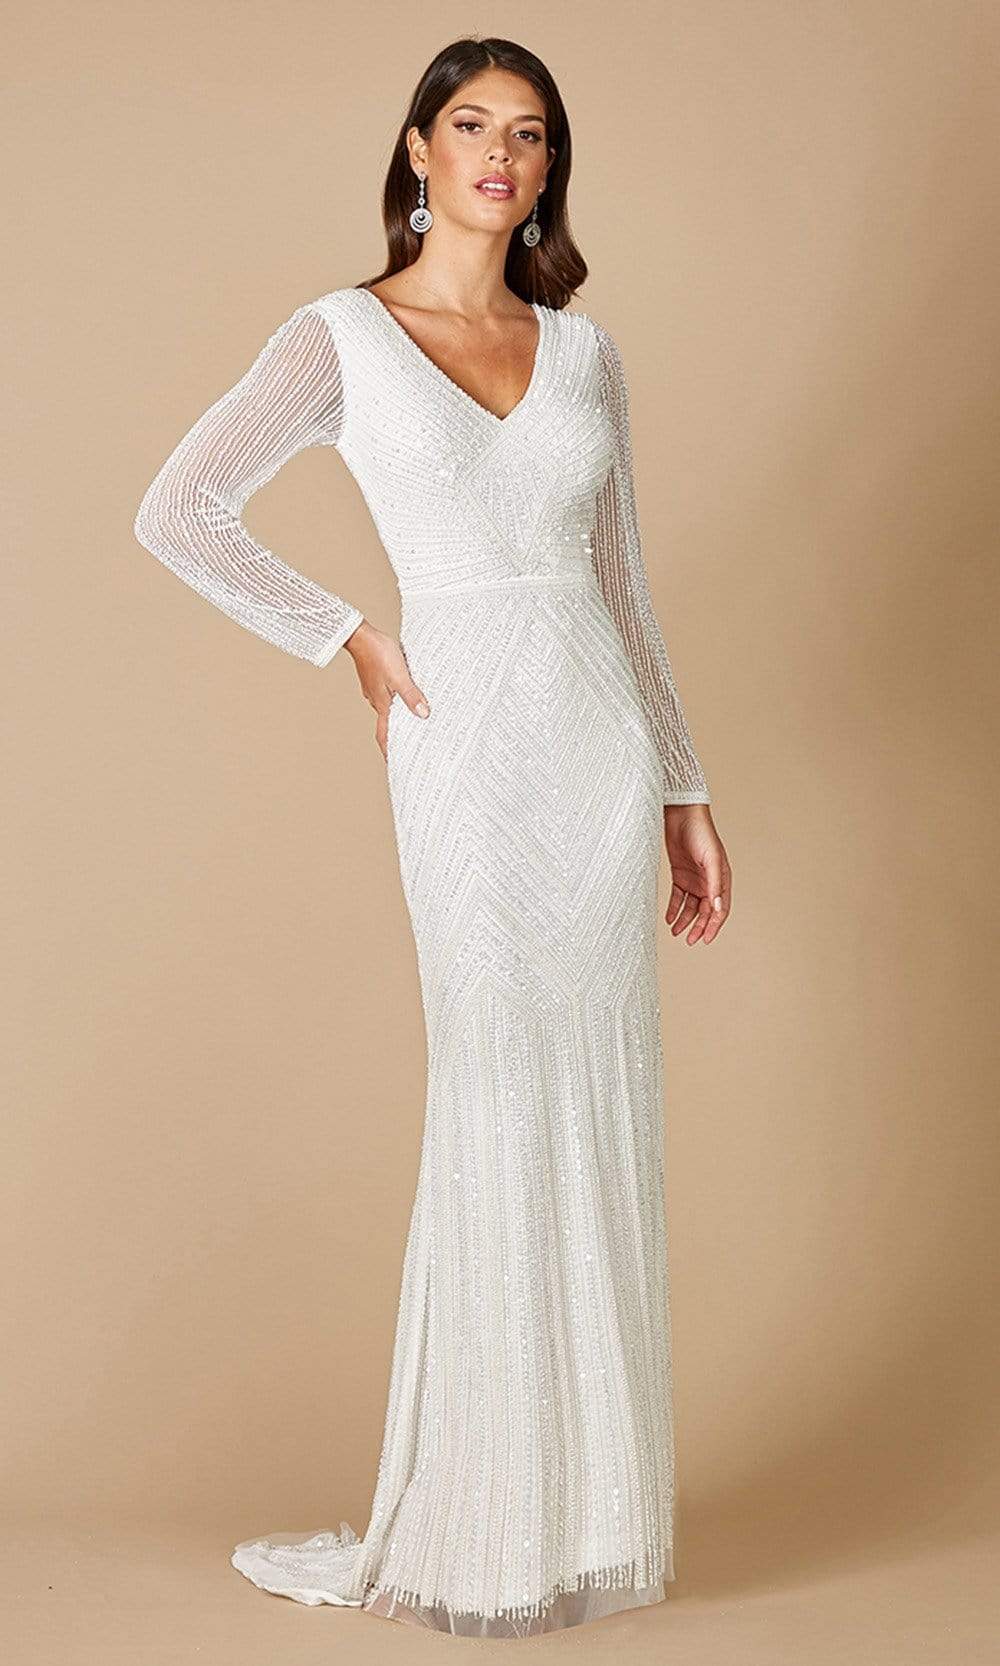 Lara Dresses - 51088 Long Sleeve Embellished Column Gown
